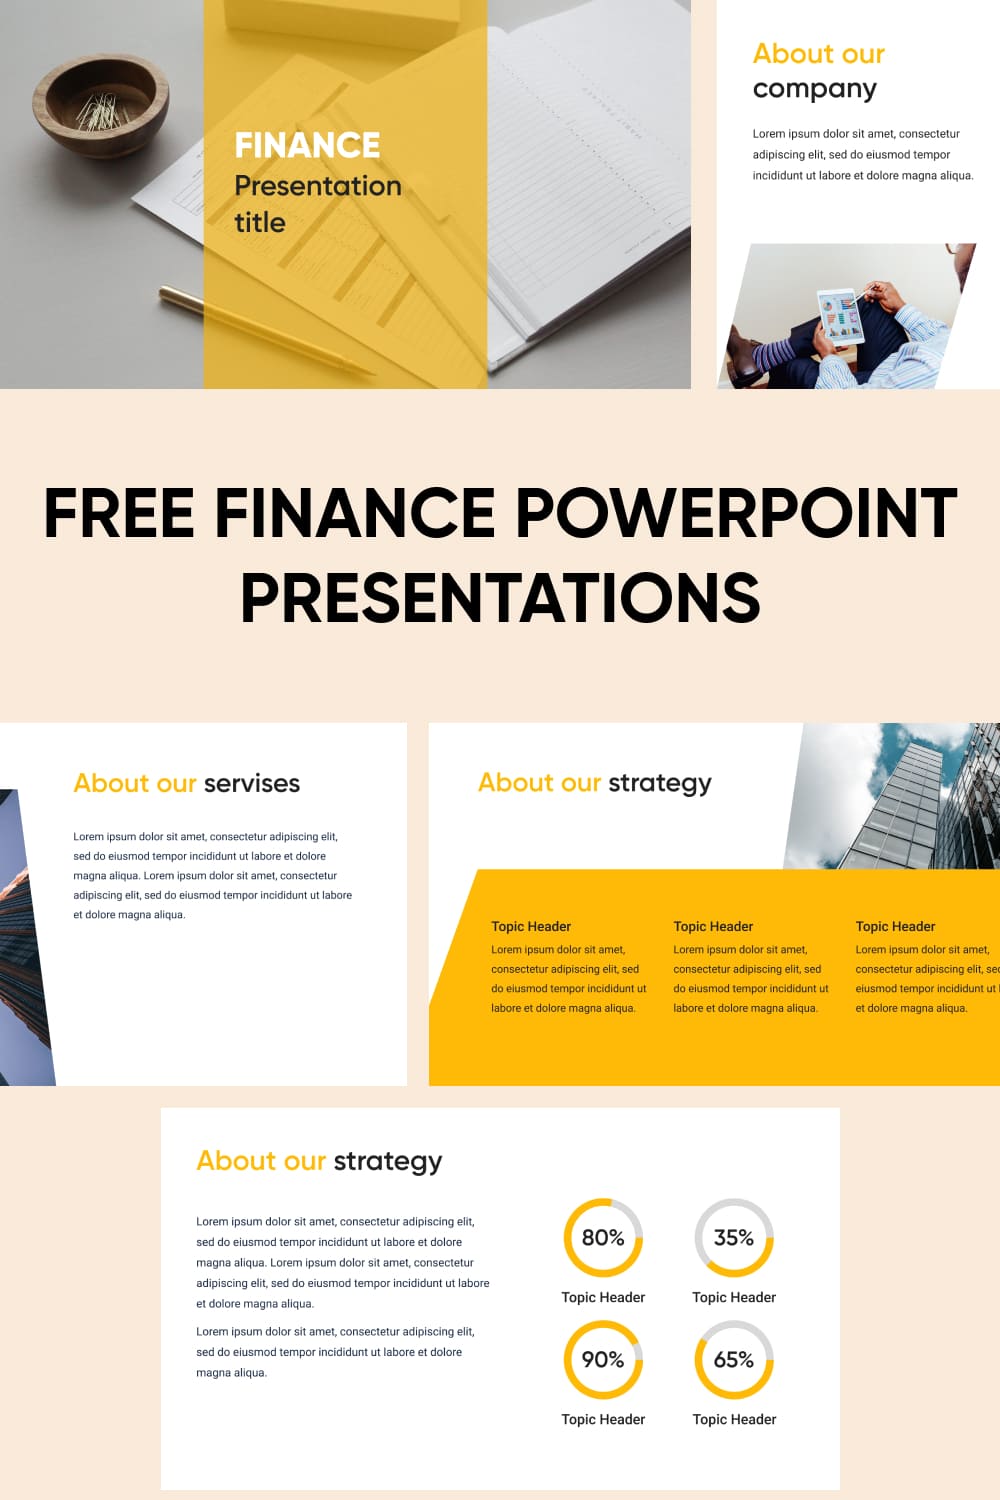 Free Finance Powerpoint Presentations Pinterest.